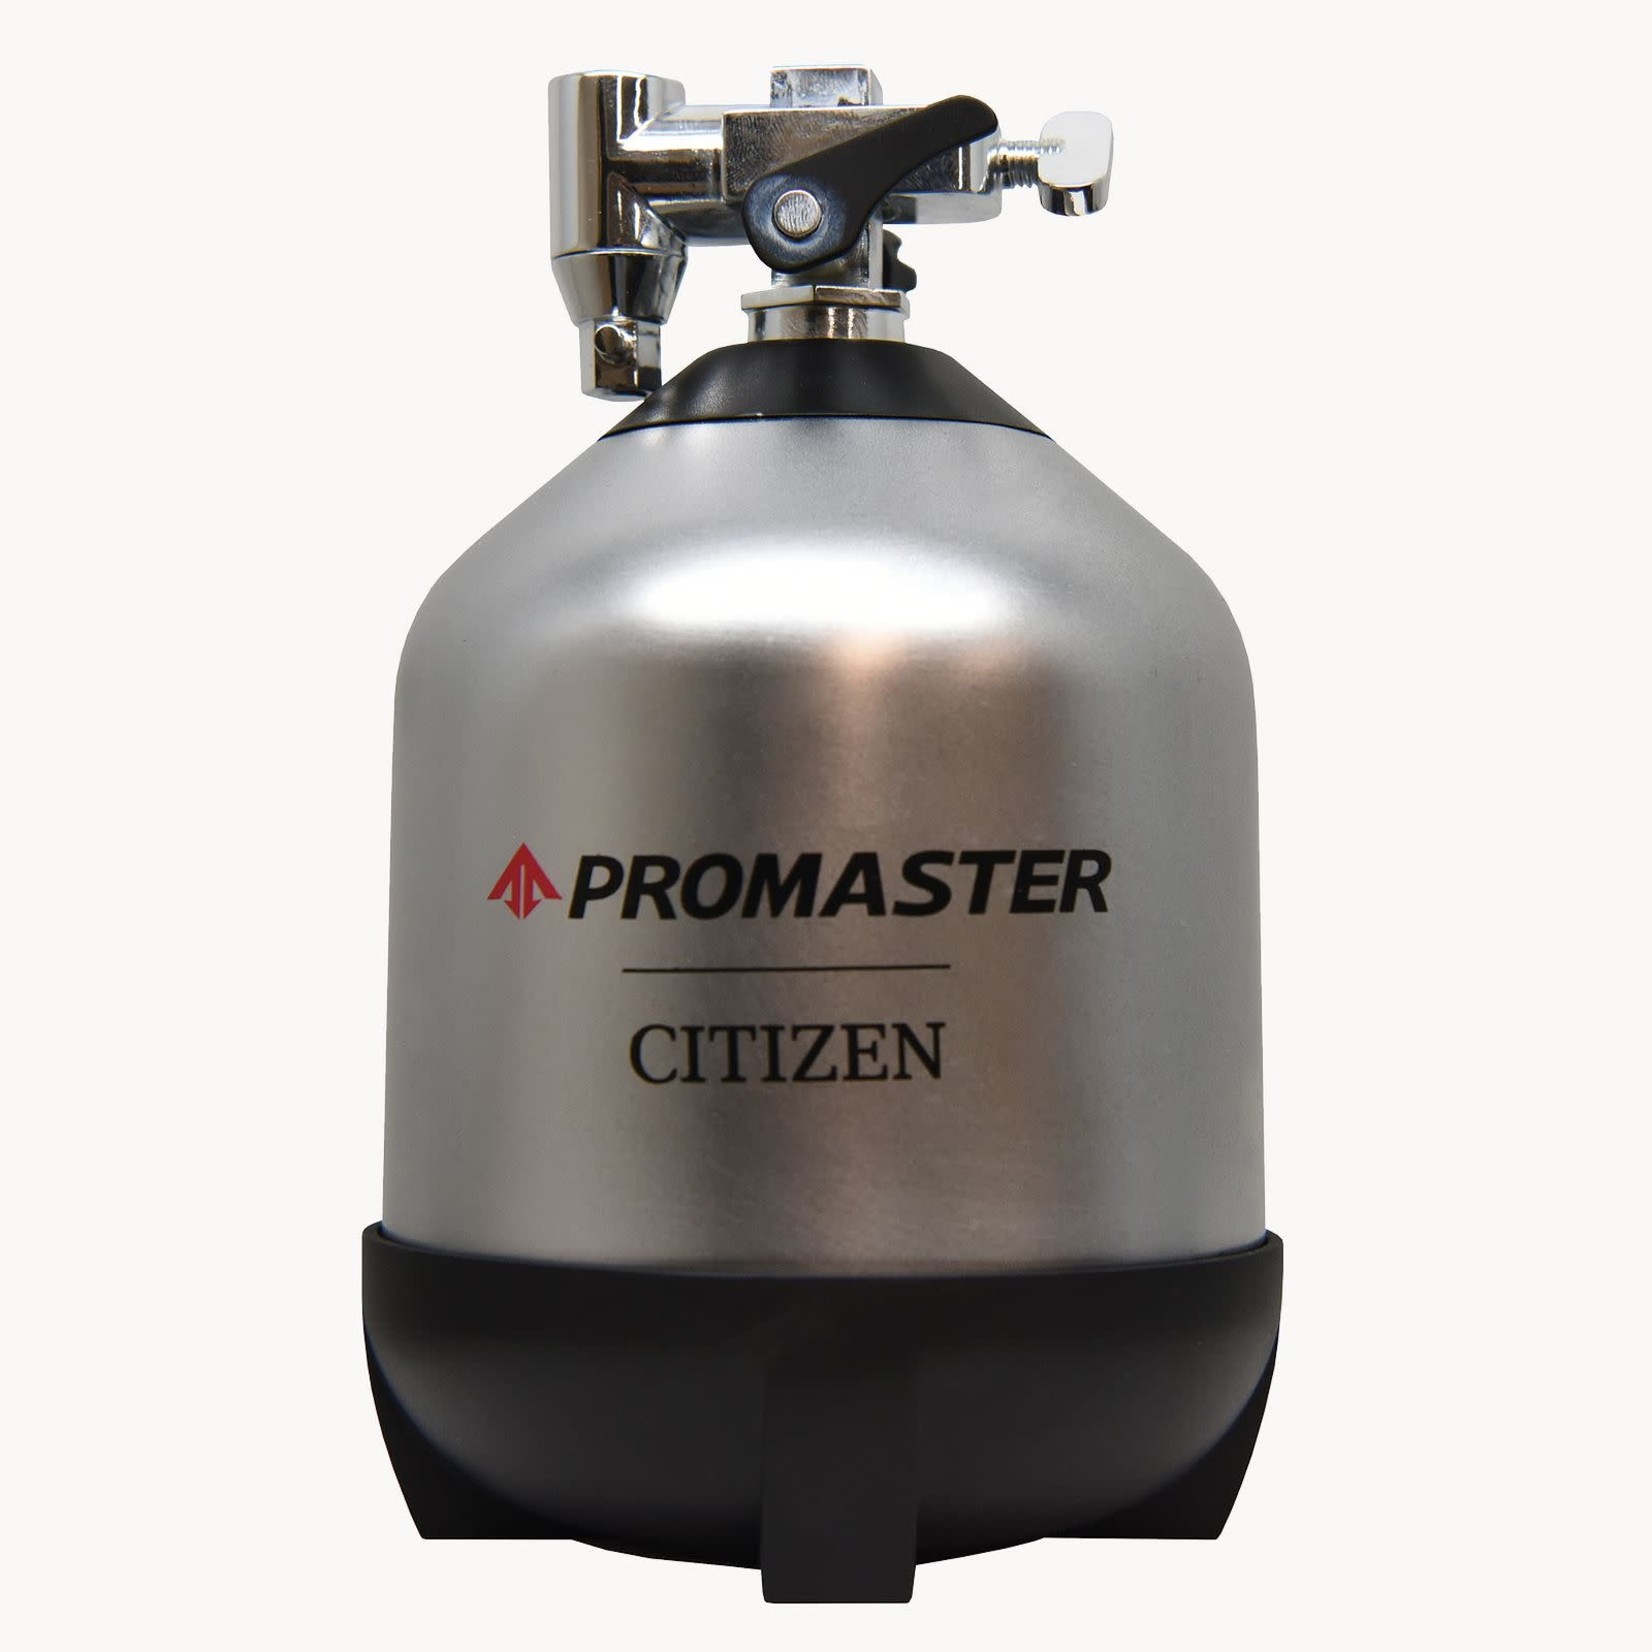 CITIZEN WATCH COMPANY Promaster Eco-Drive Citizen WR 200M Green bezel Watch